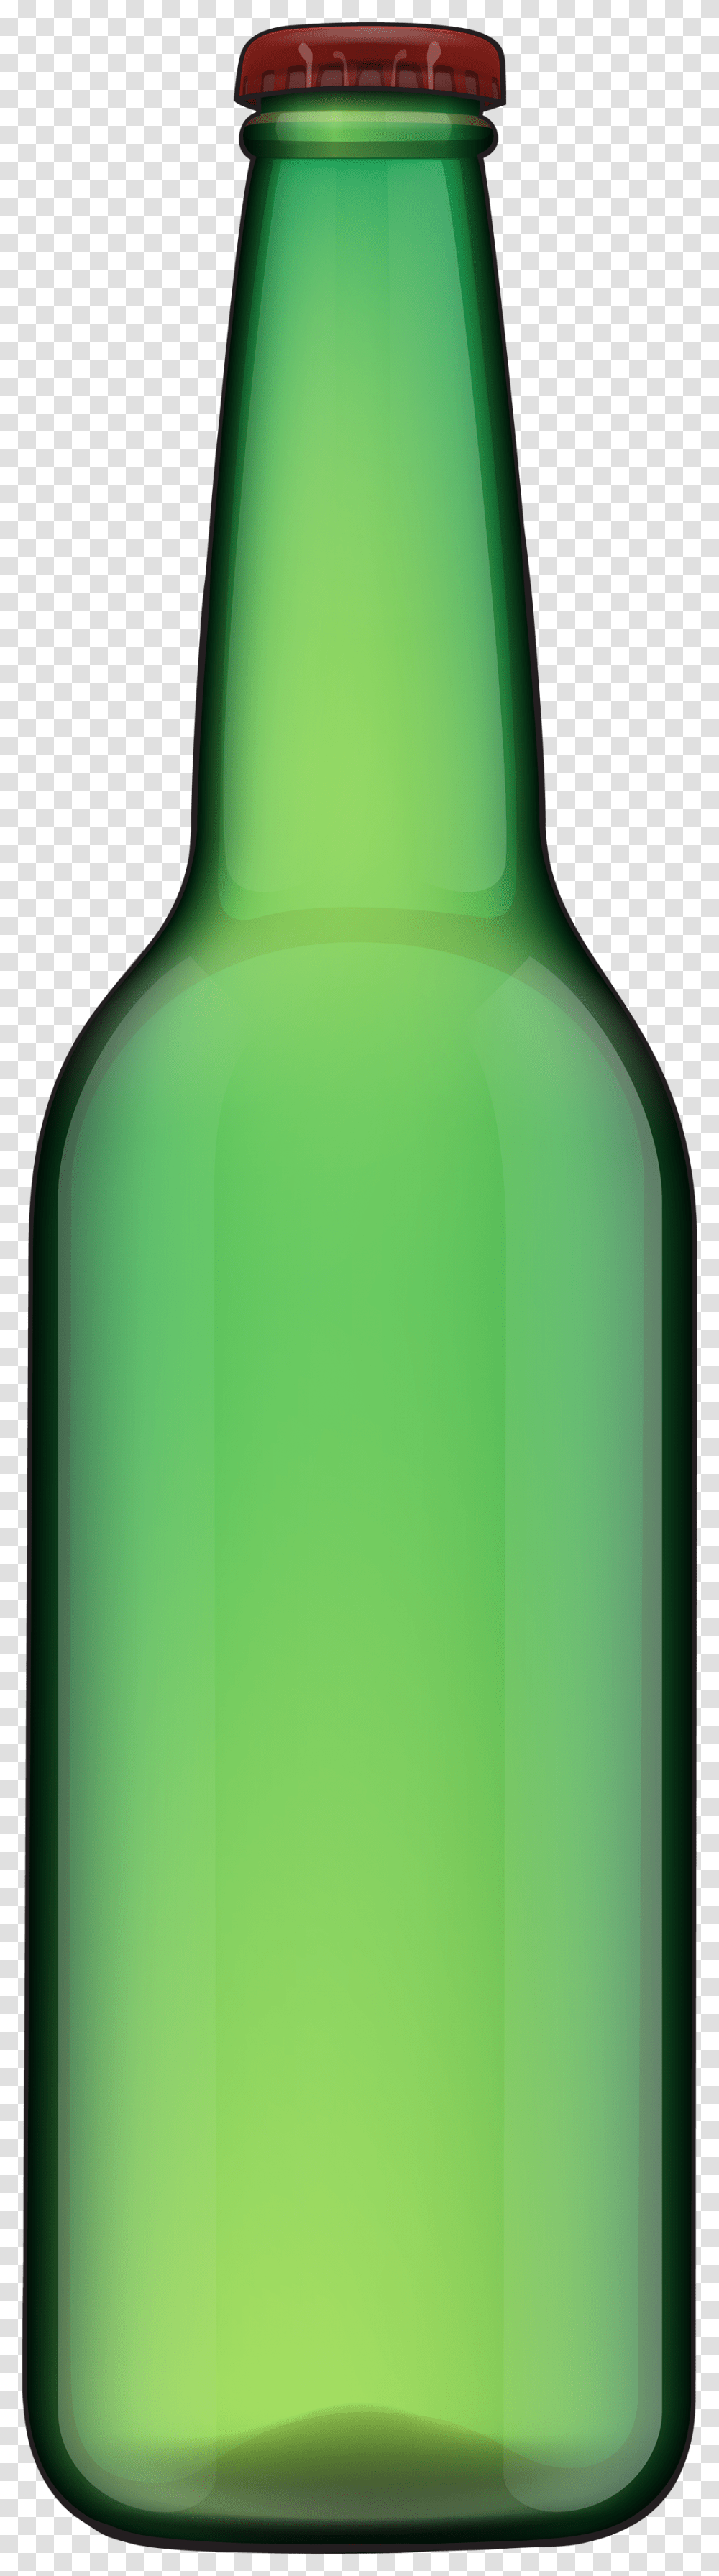 Drawing Bottles Glass Bottle Clipart Empty Beer Bottle Cartoon, Beverage, Drink, Alcohol, Green Transparent Png